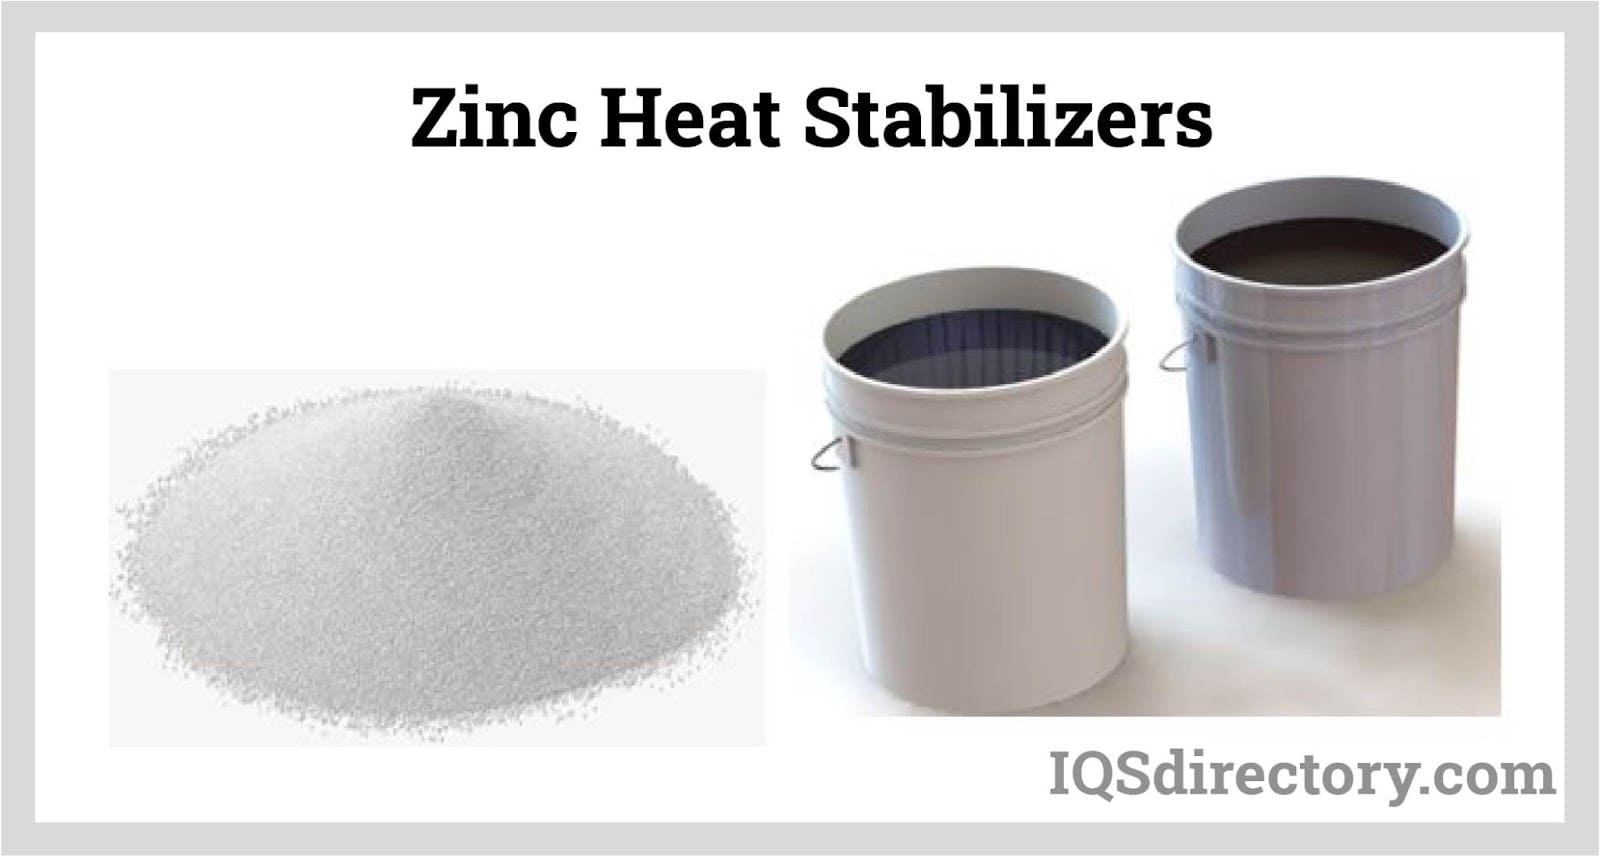 Zinc Heat Stabilizers